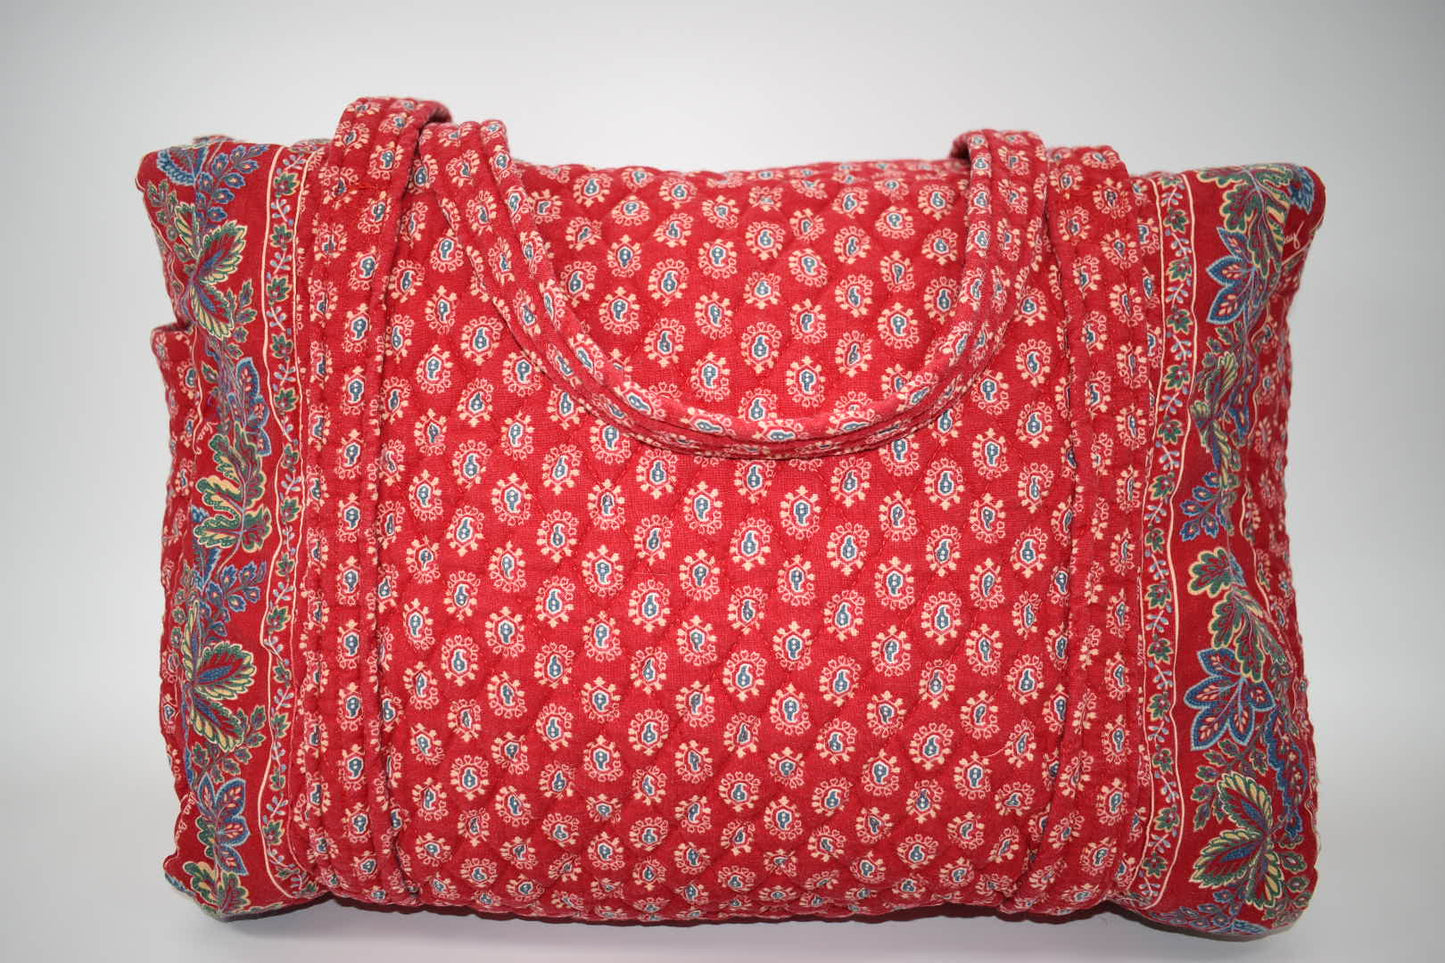 Vera Bradley Large Duffel Bag in "Classic Red-1998" Pattern